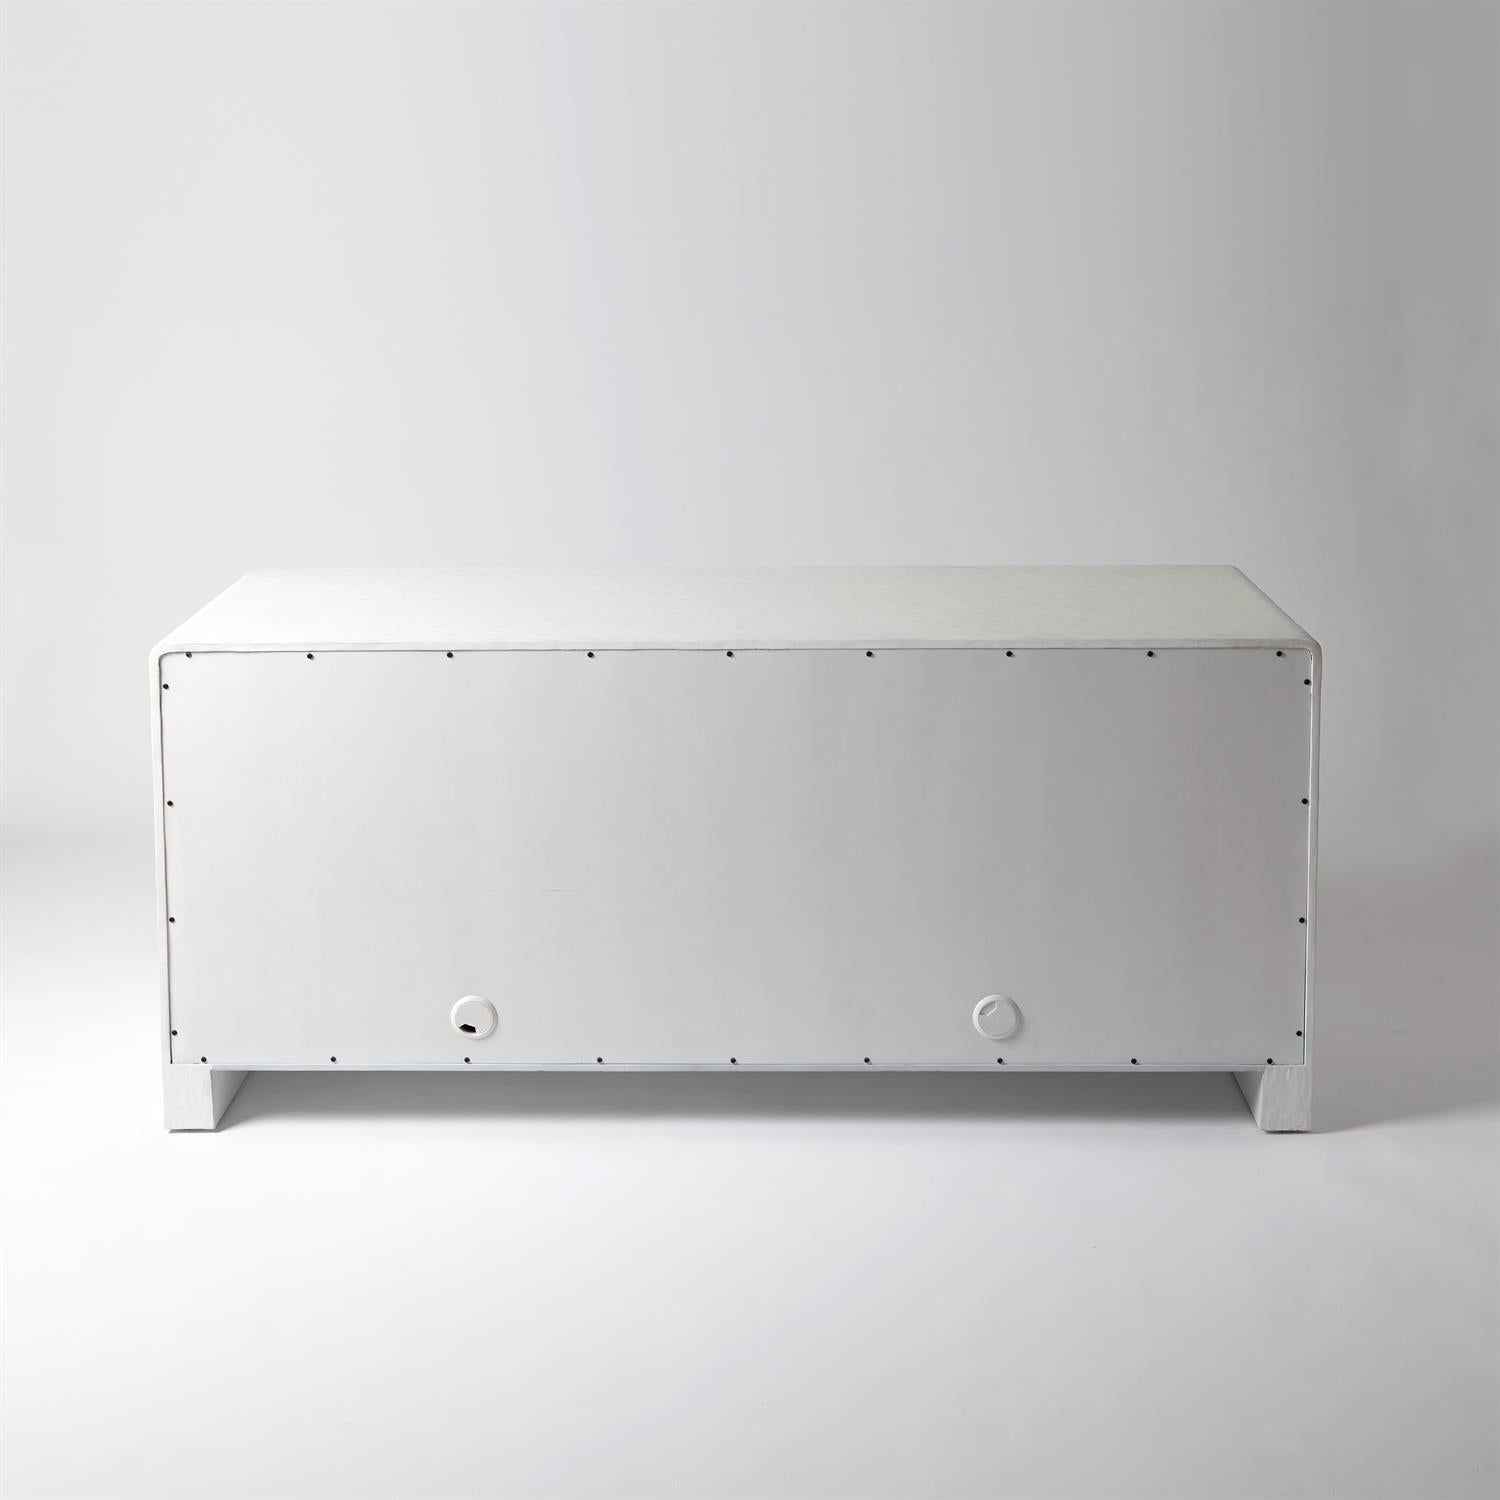 Karl Cabinet - Grats Decor Interior Design & Build Inc.